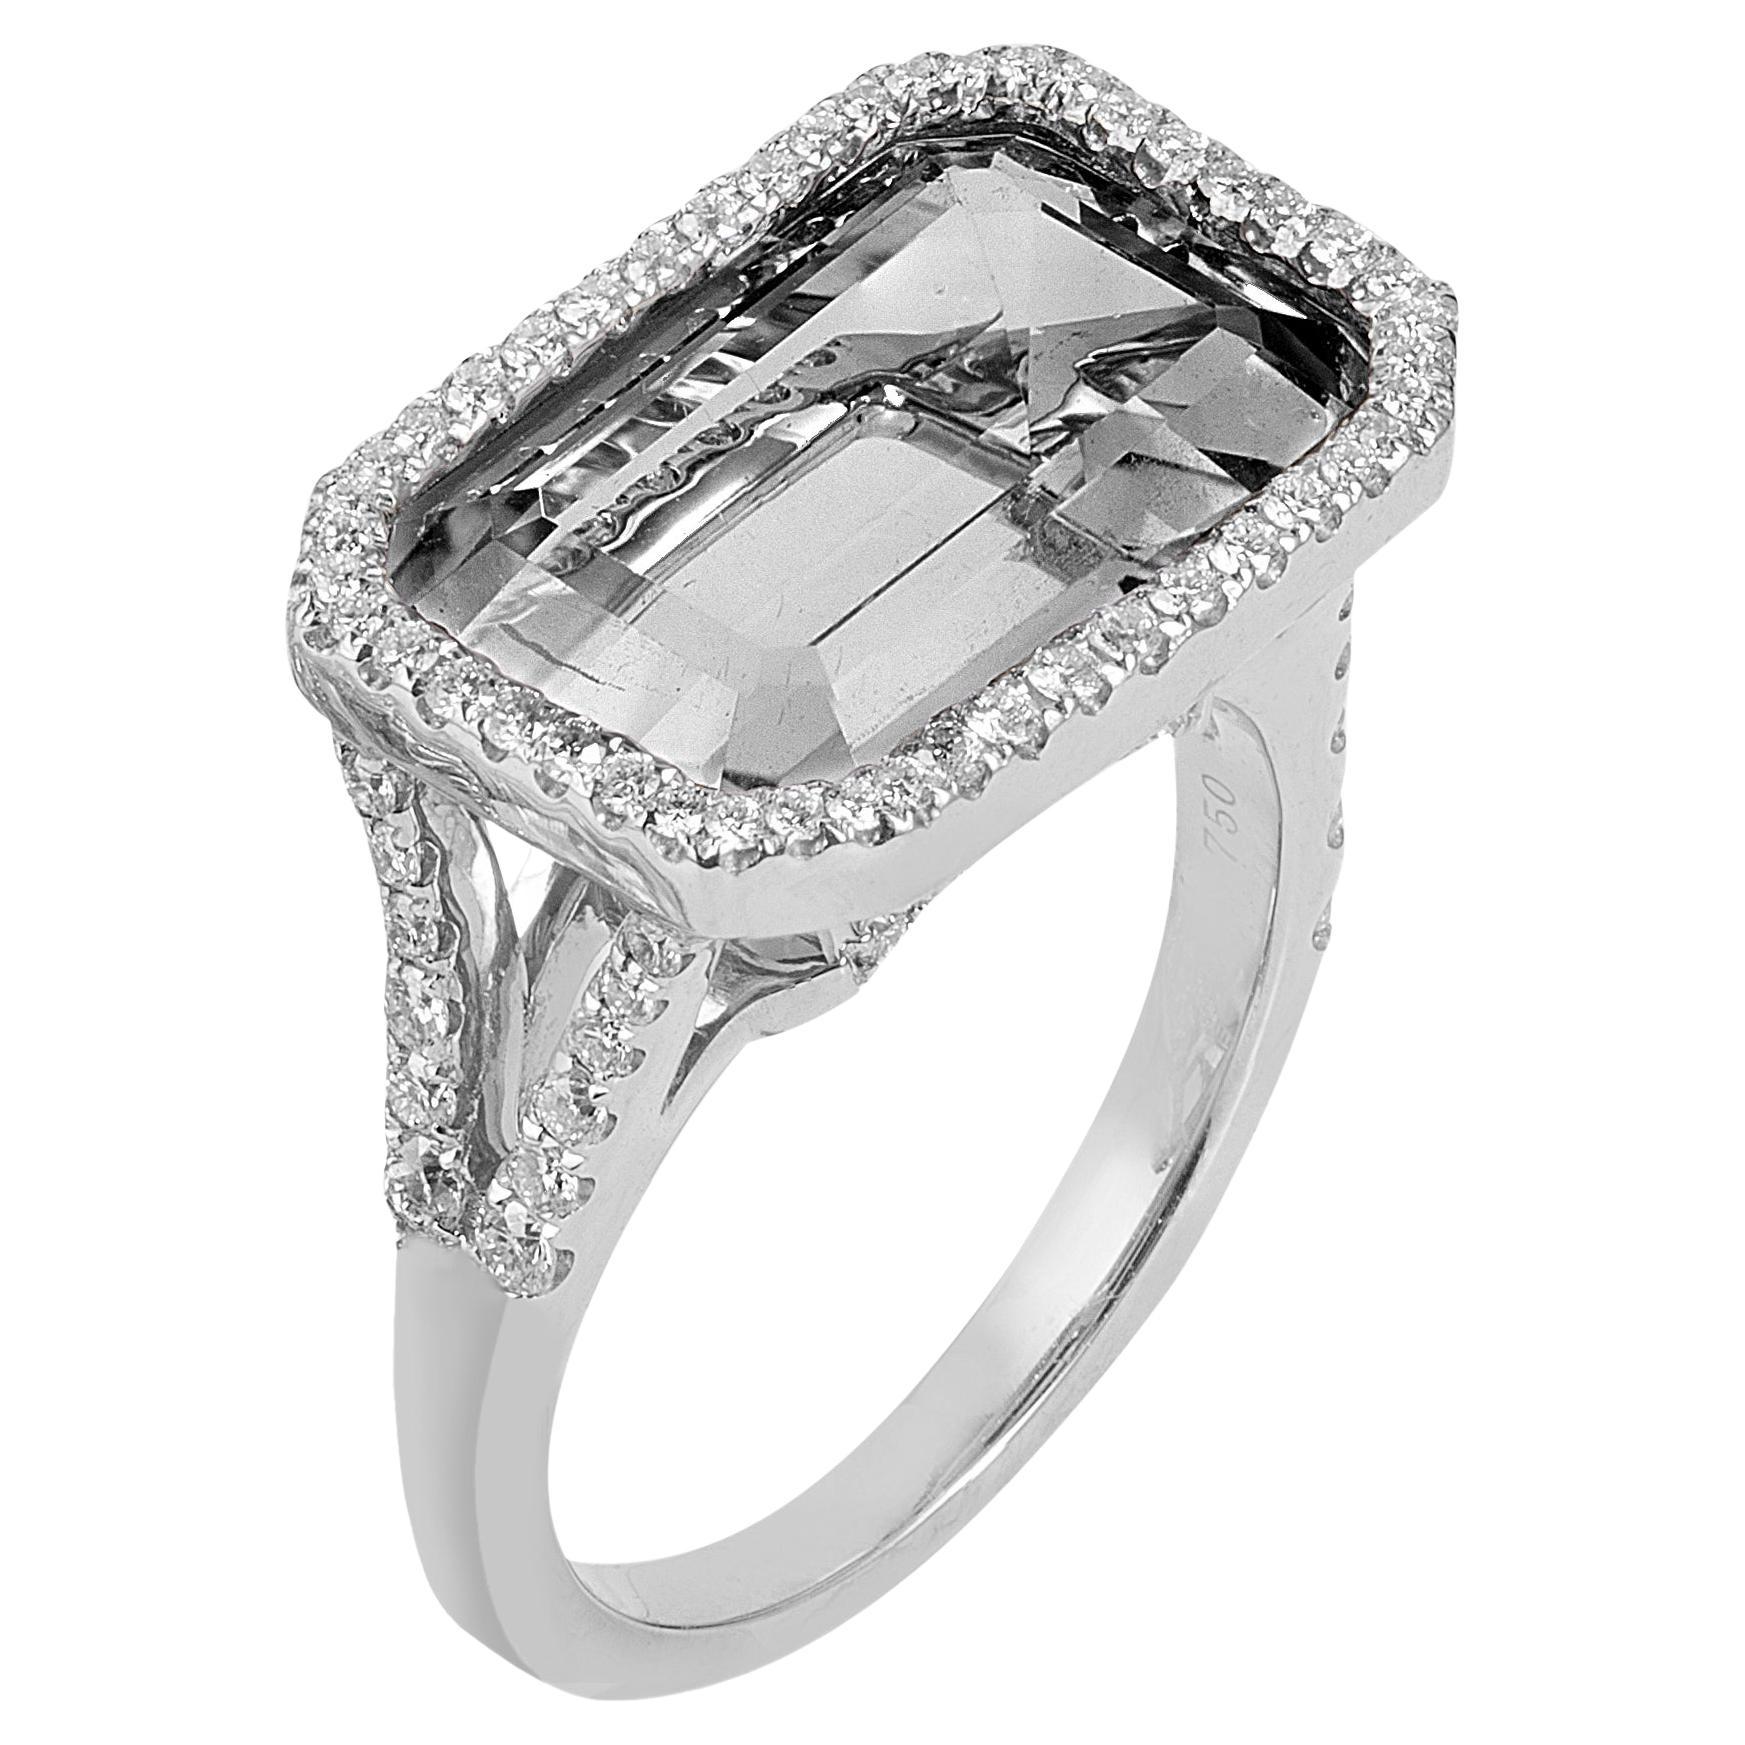 Goshwara Rock Crystal Emerald Cut and Diamond Ring